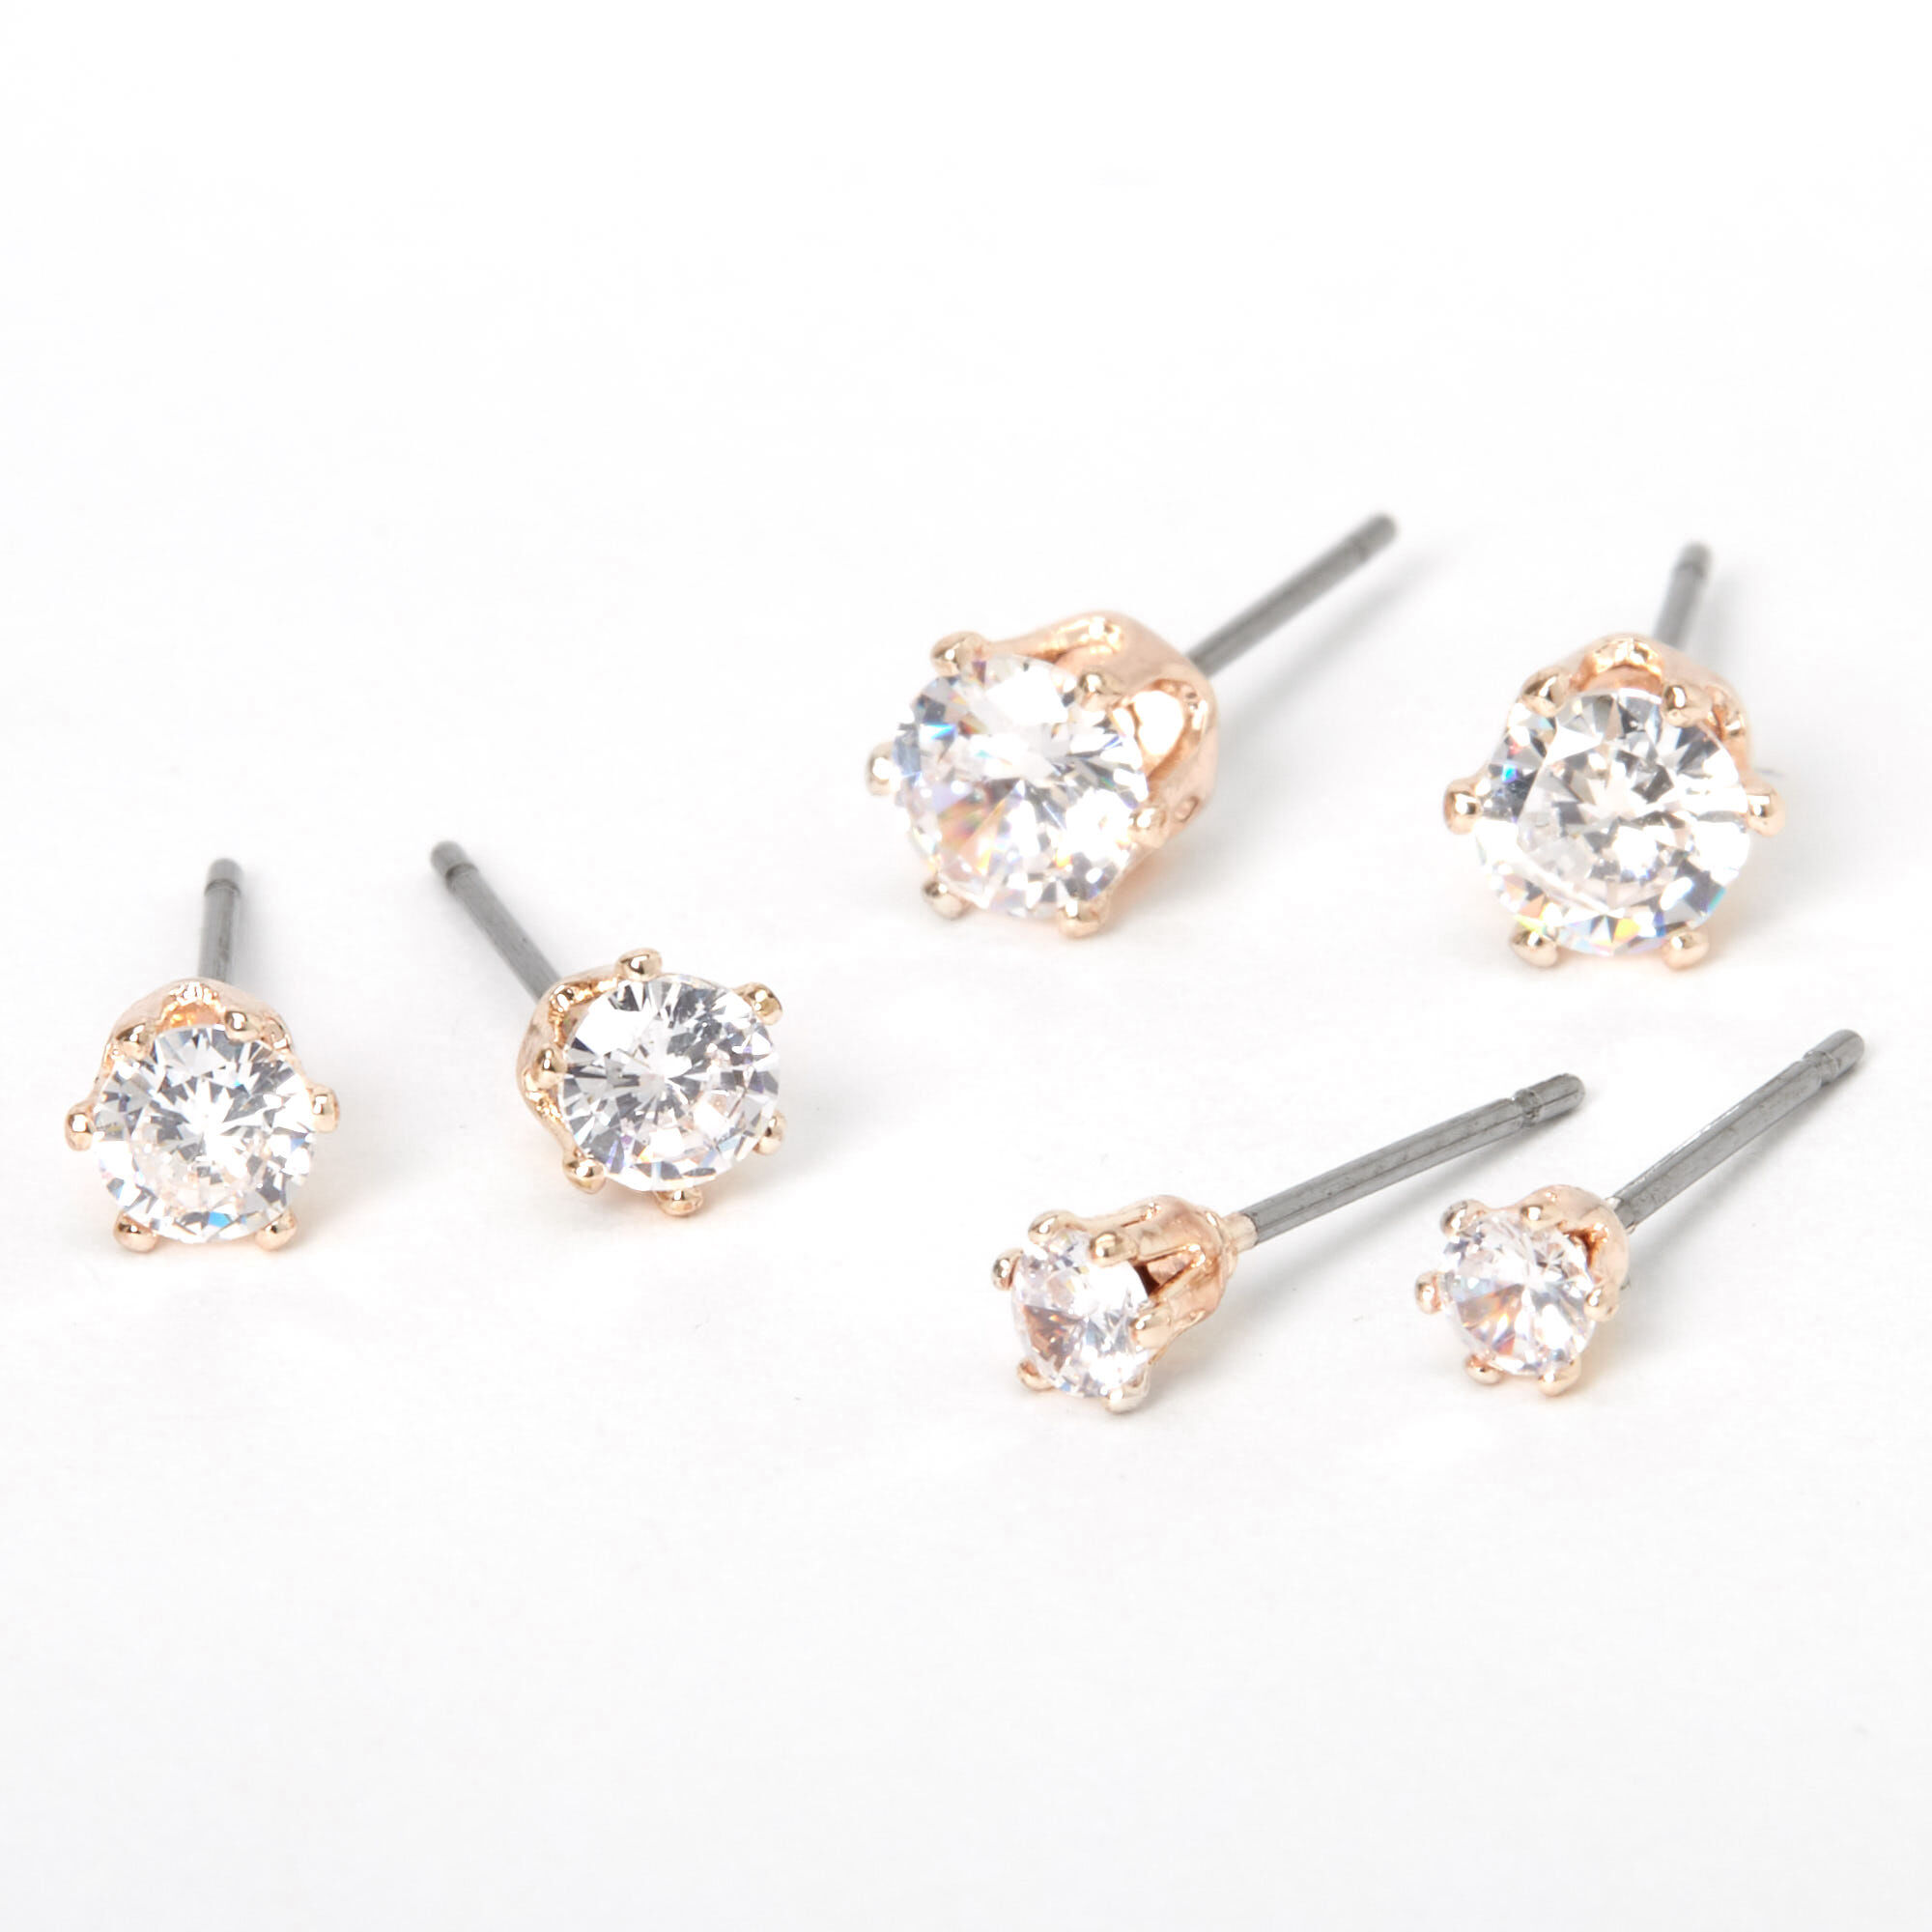 L2 26 12Mm 20Pcs Dark Rose Gold Plated Earring Studs,Earrings Blank/Base,Fit 12Mm Glass,Buttons;Earring Bezels